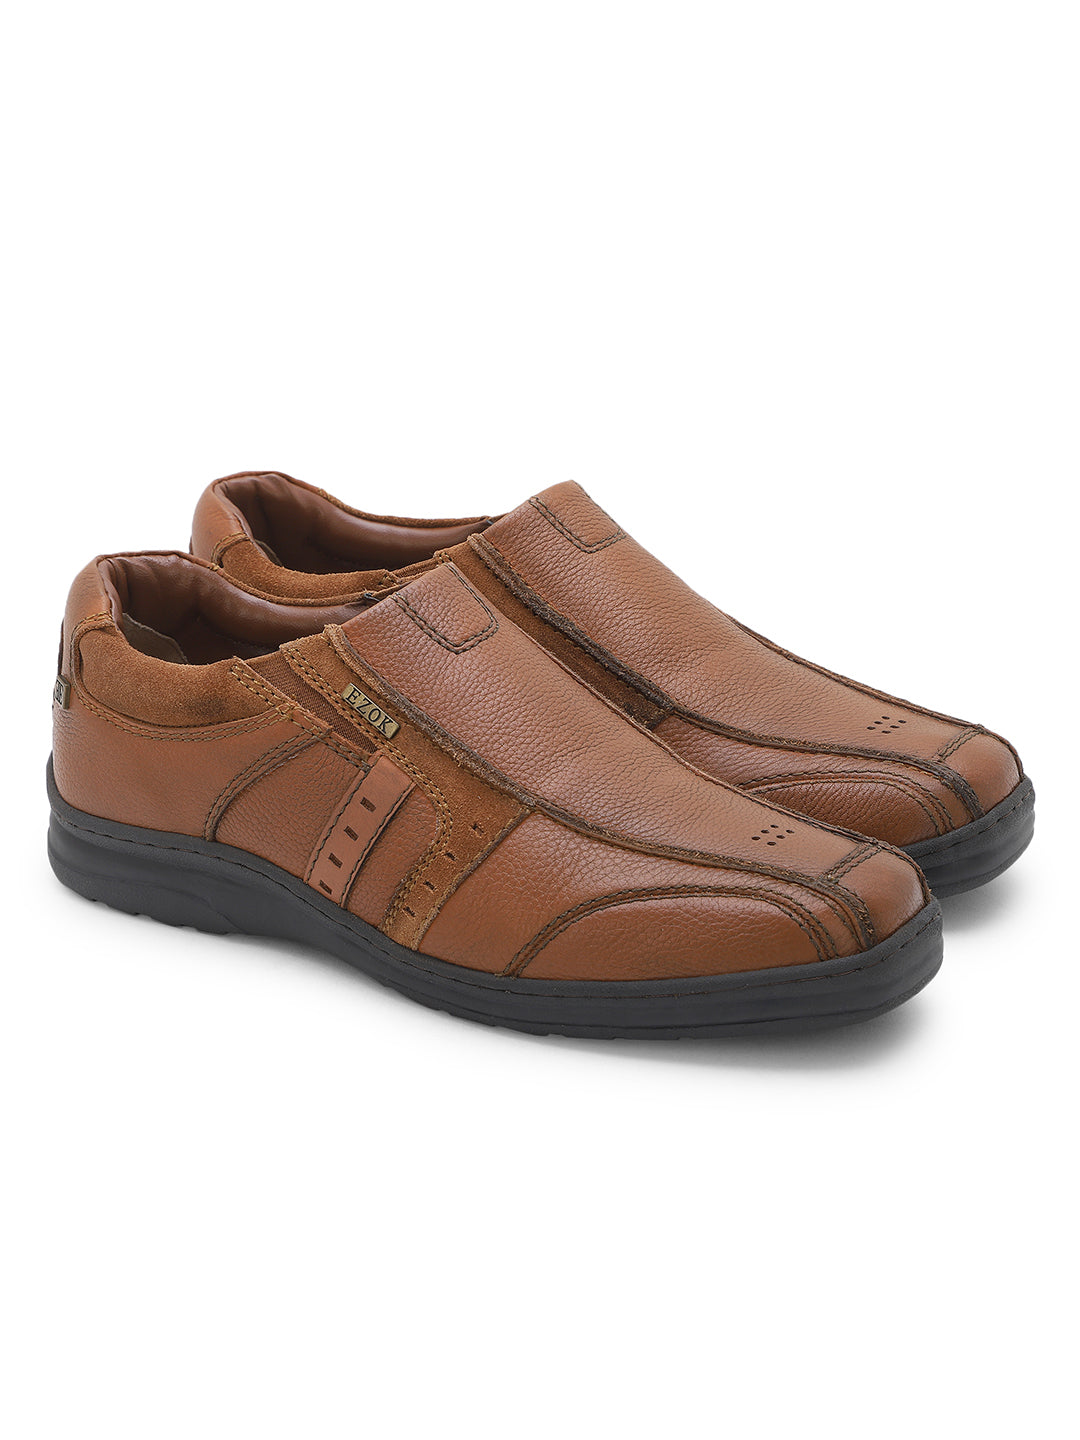 Ezok Men's Genuine Leather Slip-Ons Shoes